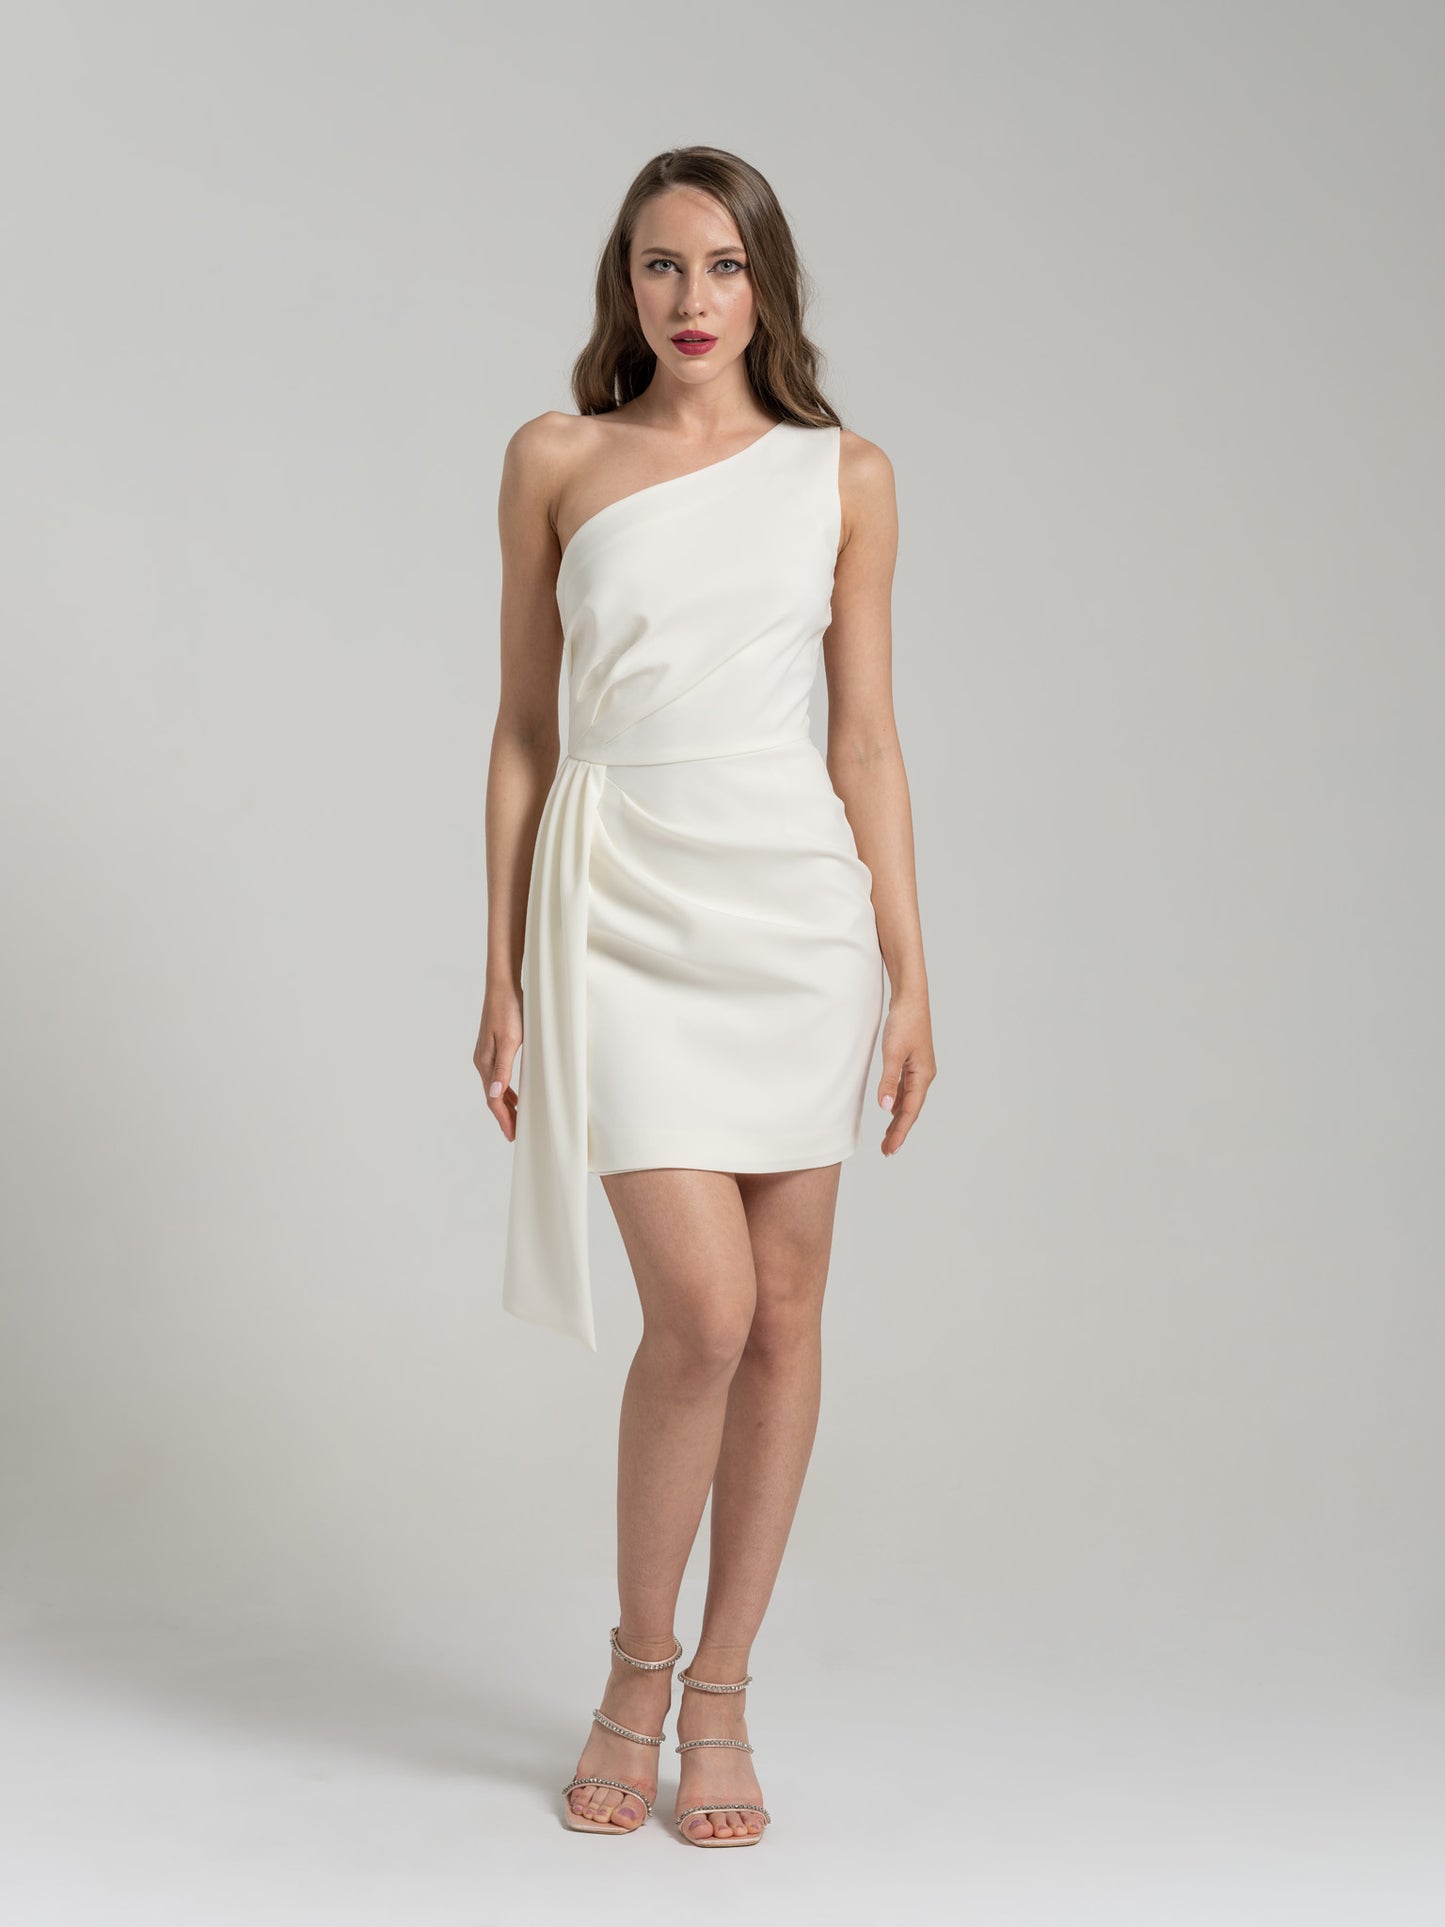 Iconic Glamour Short Dress - Pearl White by Tia Dorraine Women's Luxury Fashion Designer Clothing Brand